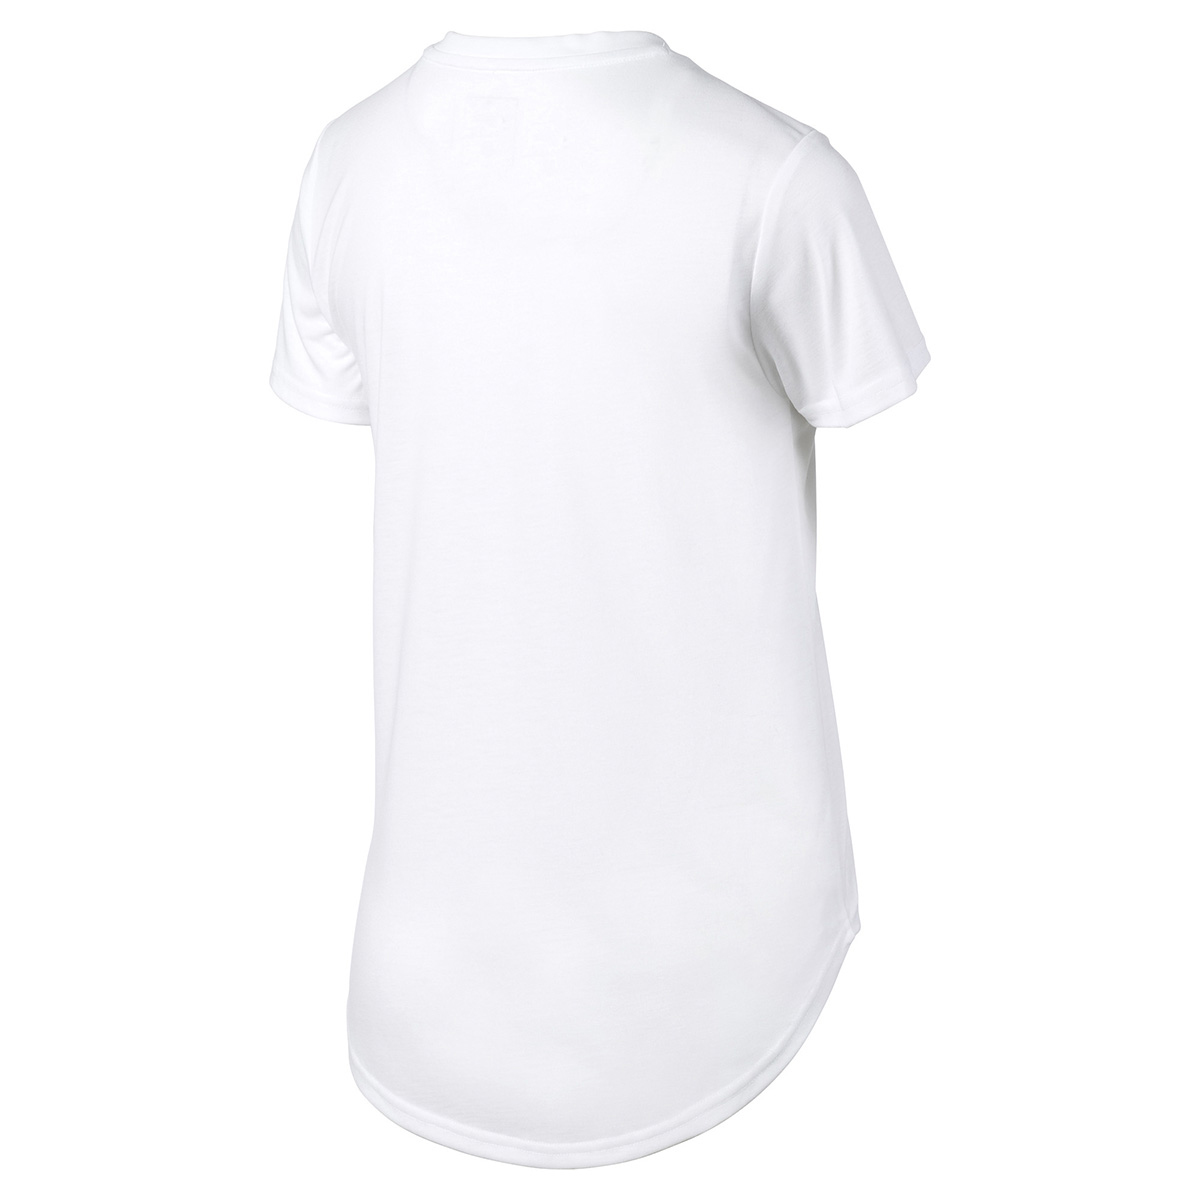 PUMA EVOSTRIPE Tee Damen T-shirt Sportswear 580057 02 weiss